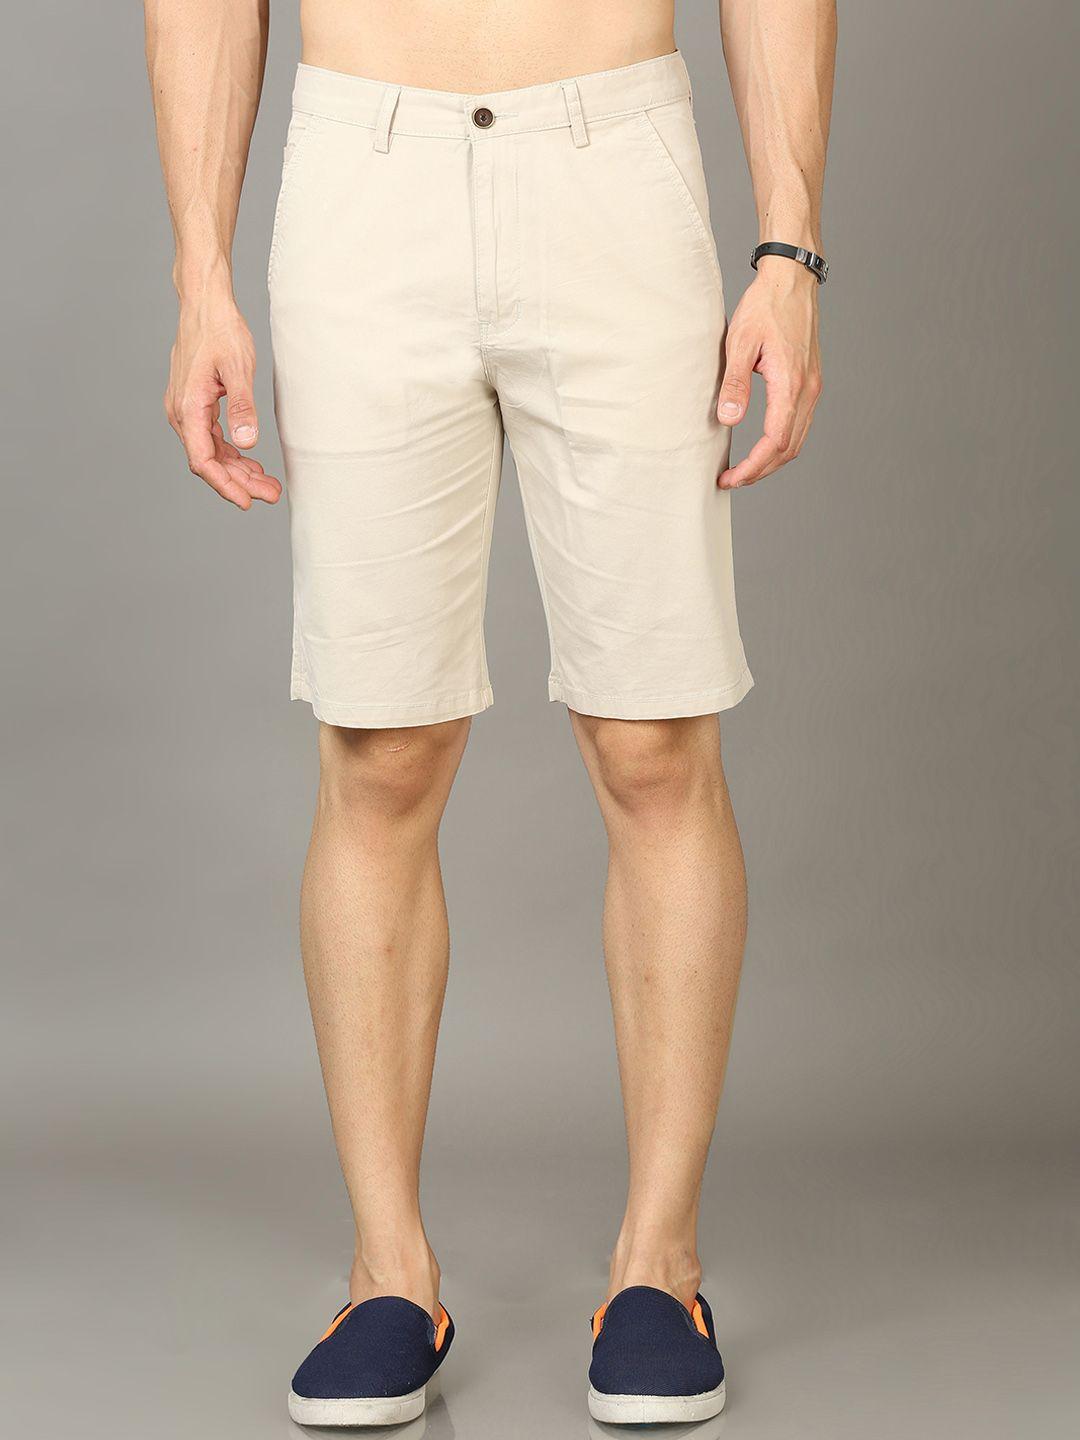 bushirt men mid-rise pure cotton shorts